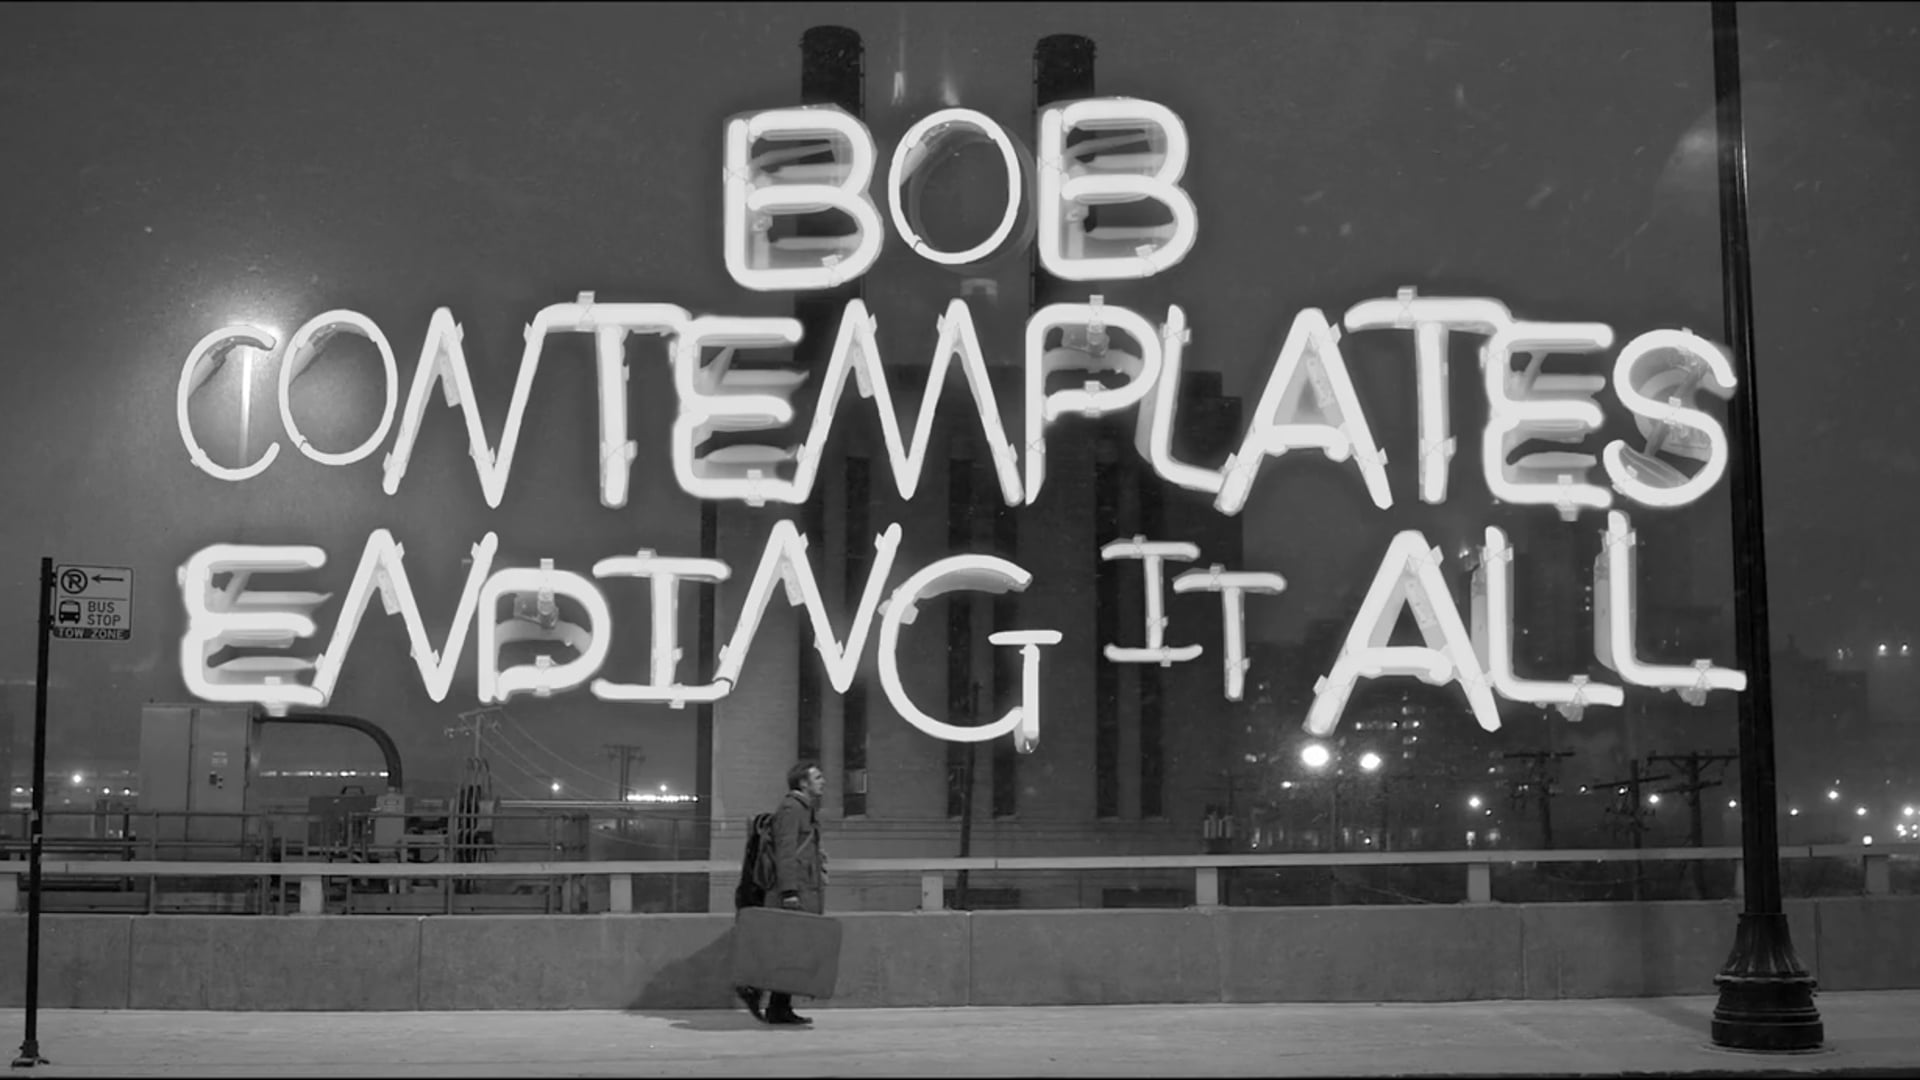 Bob Contemplates Ending It All